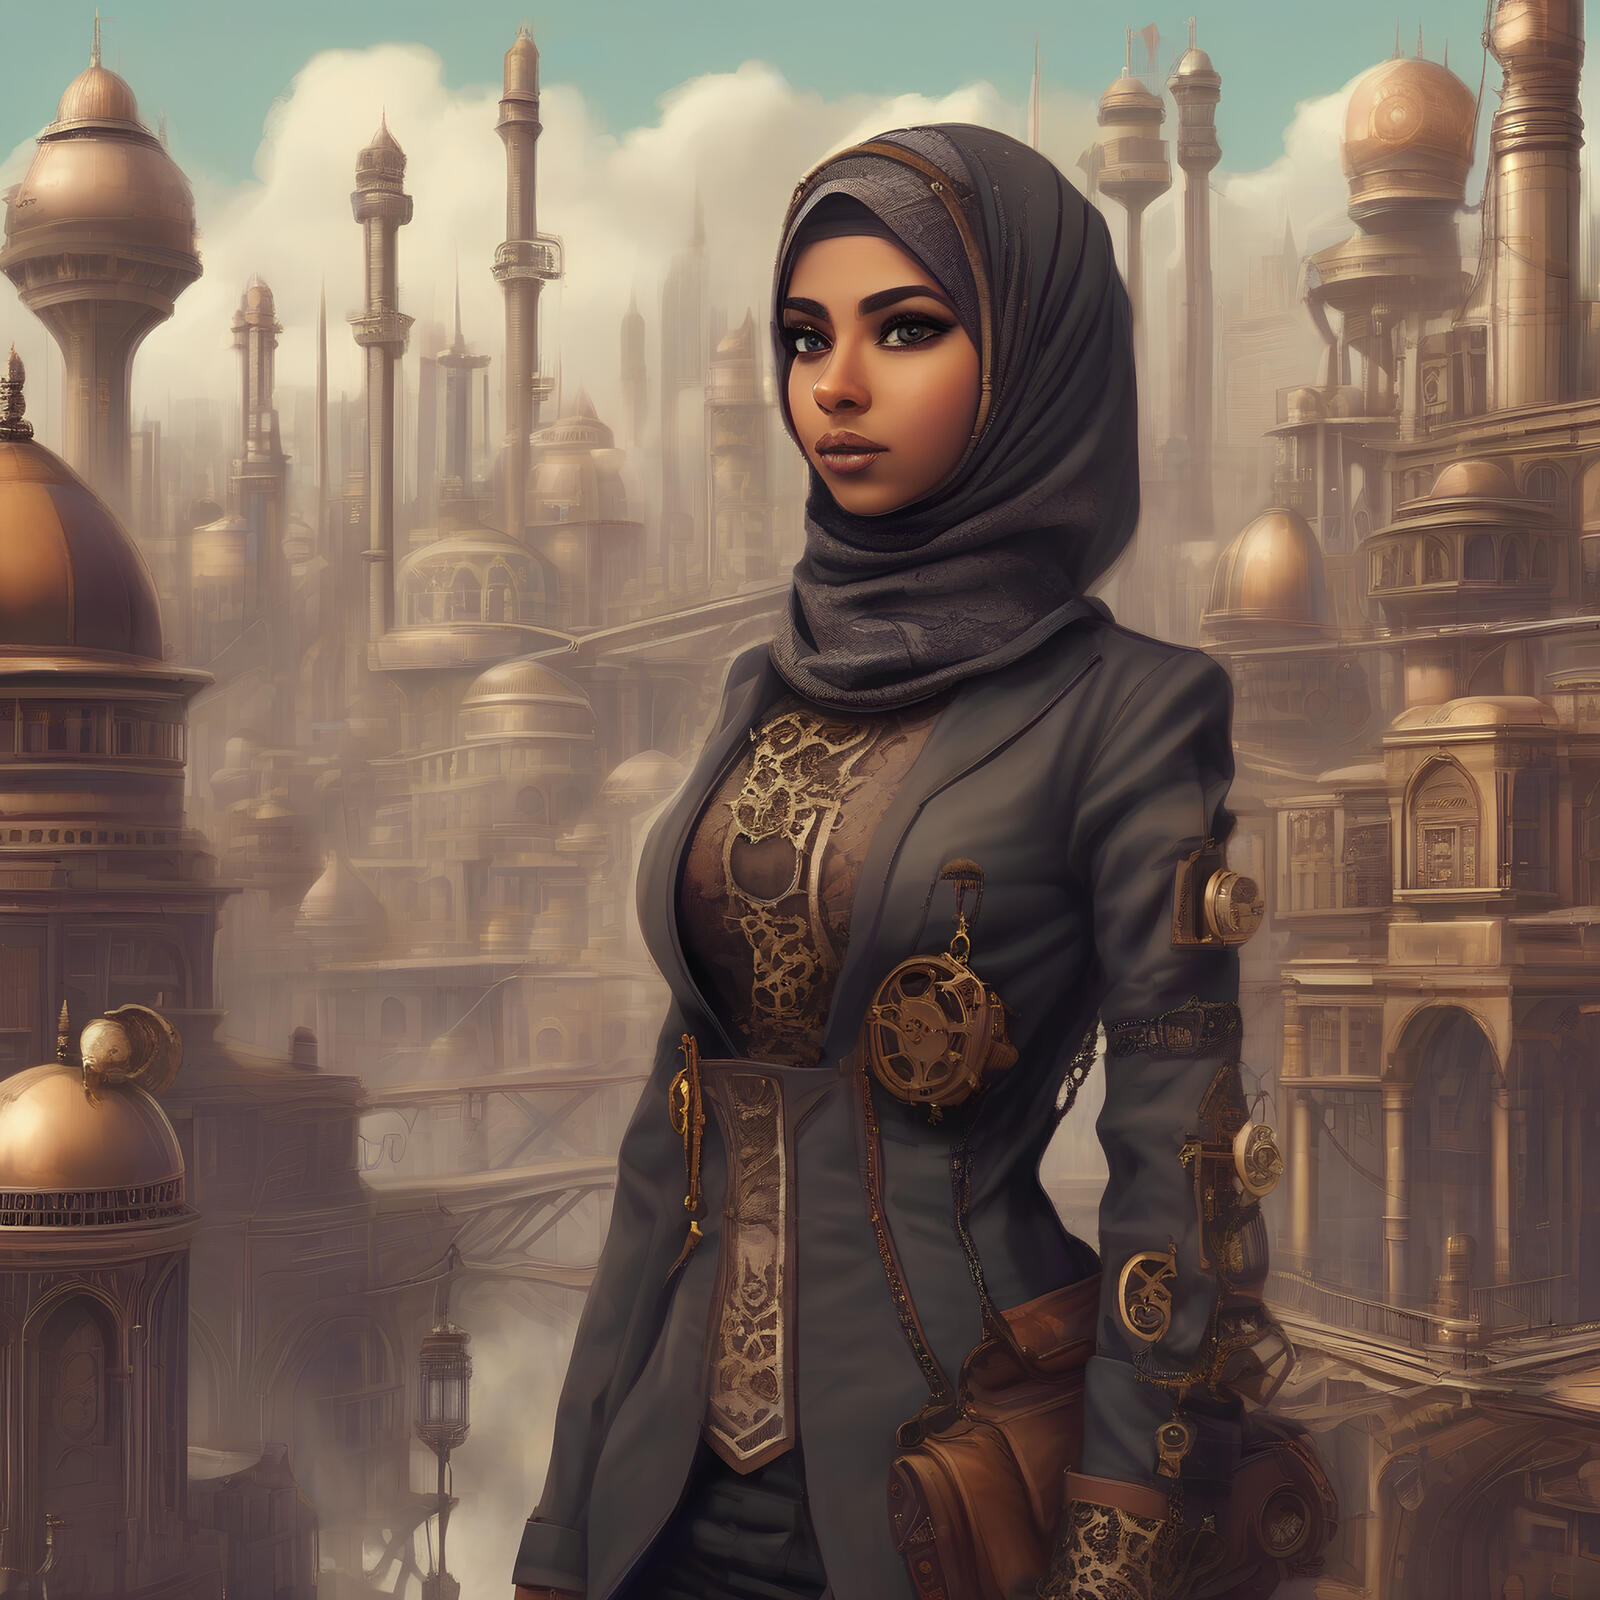 Бесплатное фото Muslim girl steampunk city